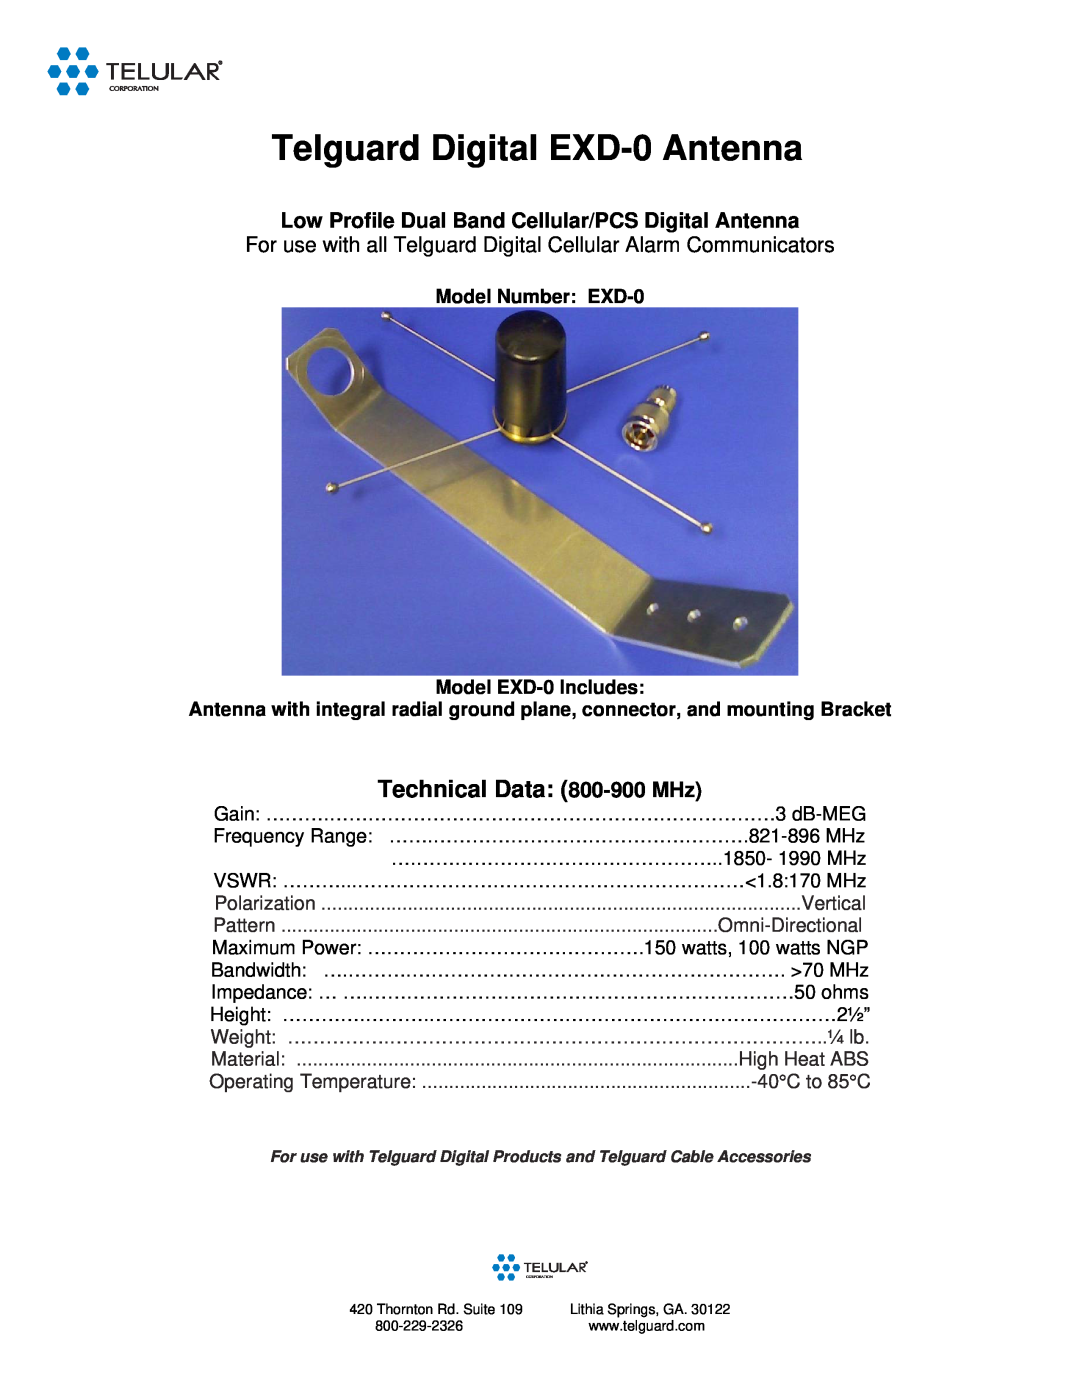 Telular manual Telguard Digital EXD-0Antenna, Technical Data 800-900MHz, Model Number EXD-0 Model EXD-0Includes 